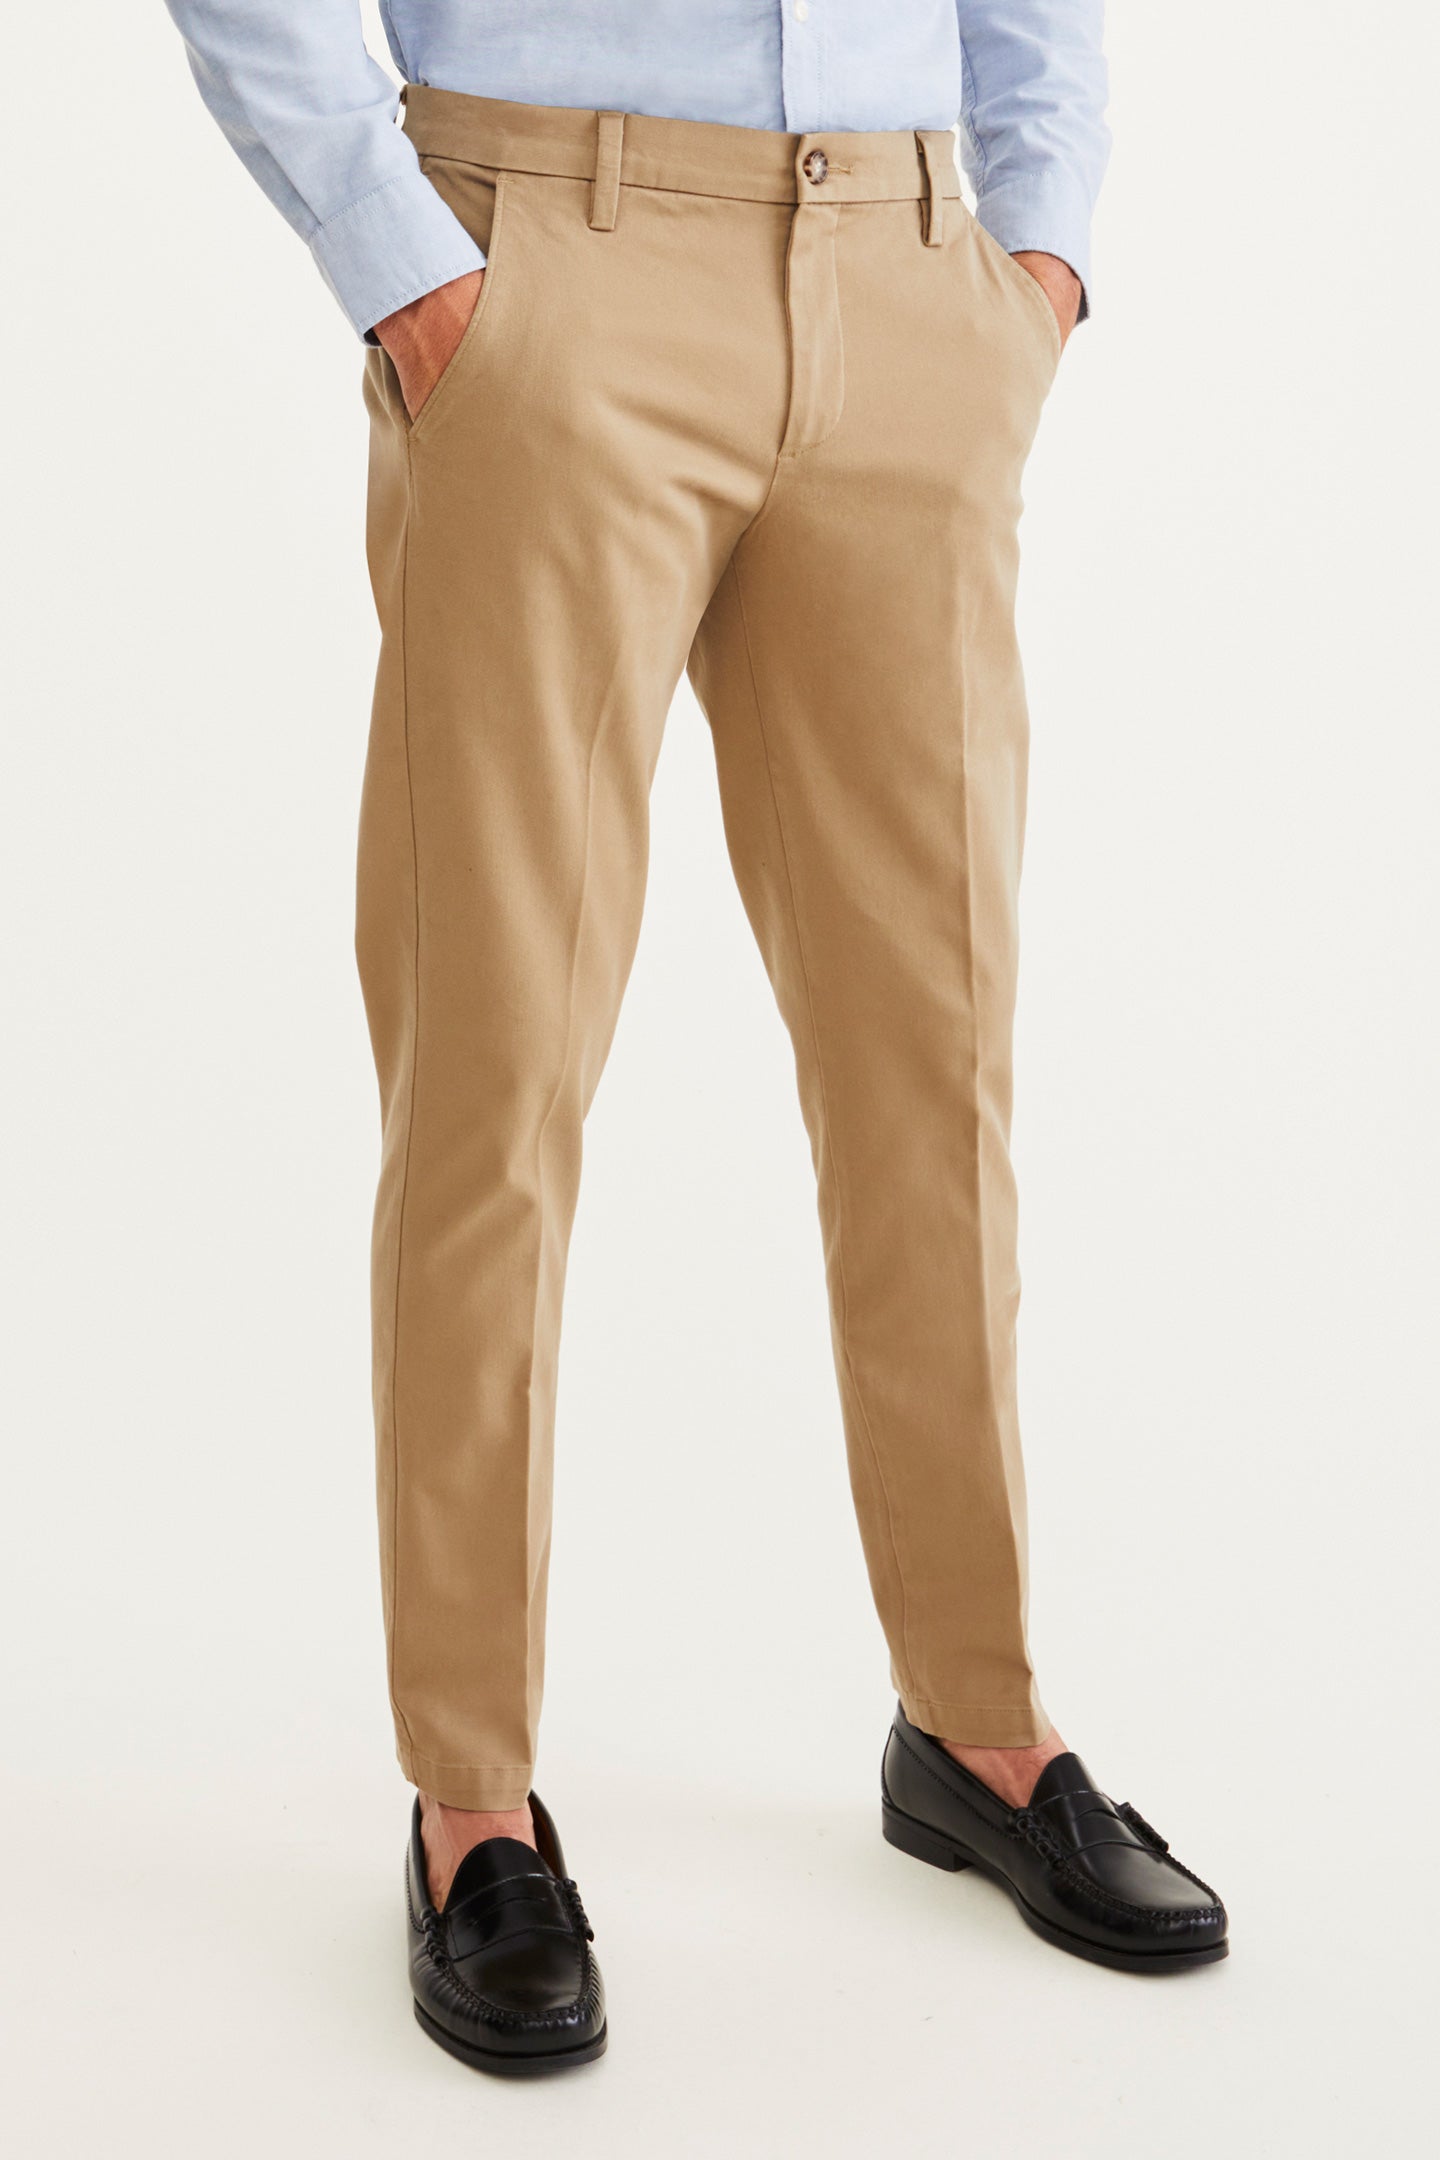 Men's Khaki Pants, Chinos, Dress Pants | Dockers® US